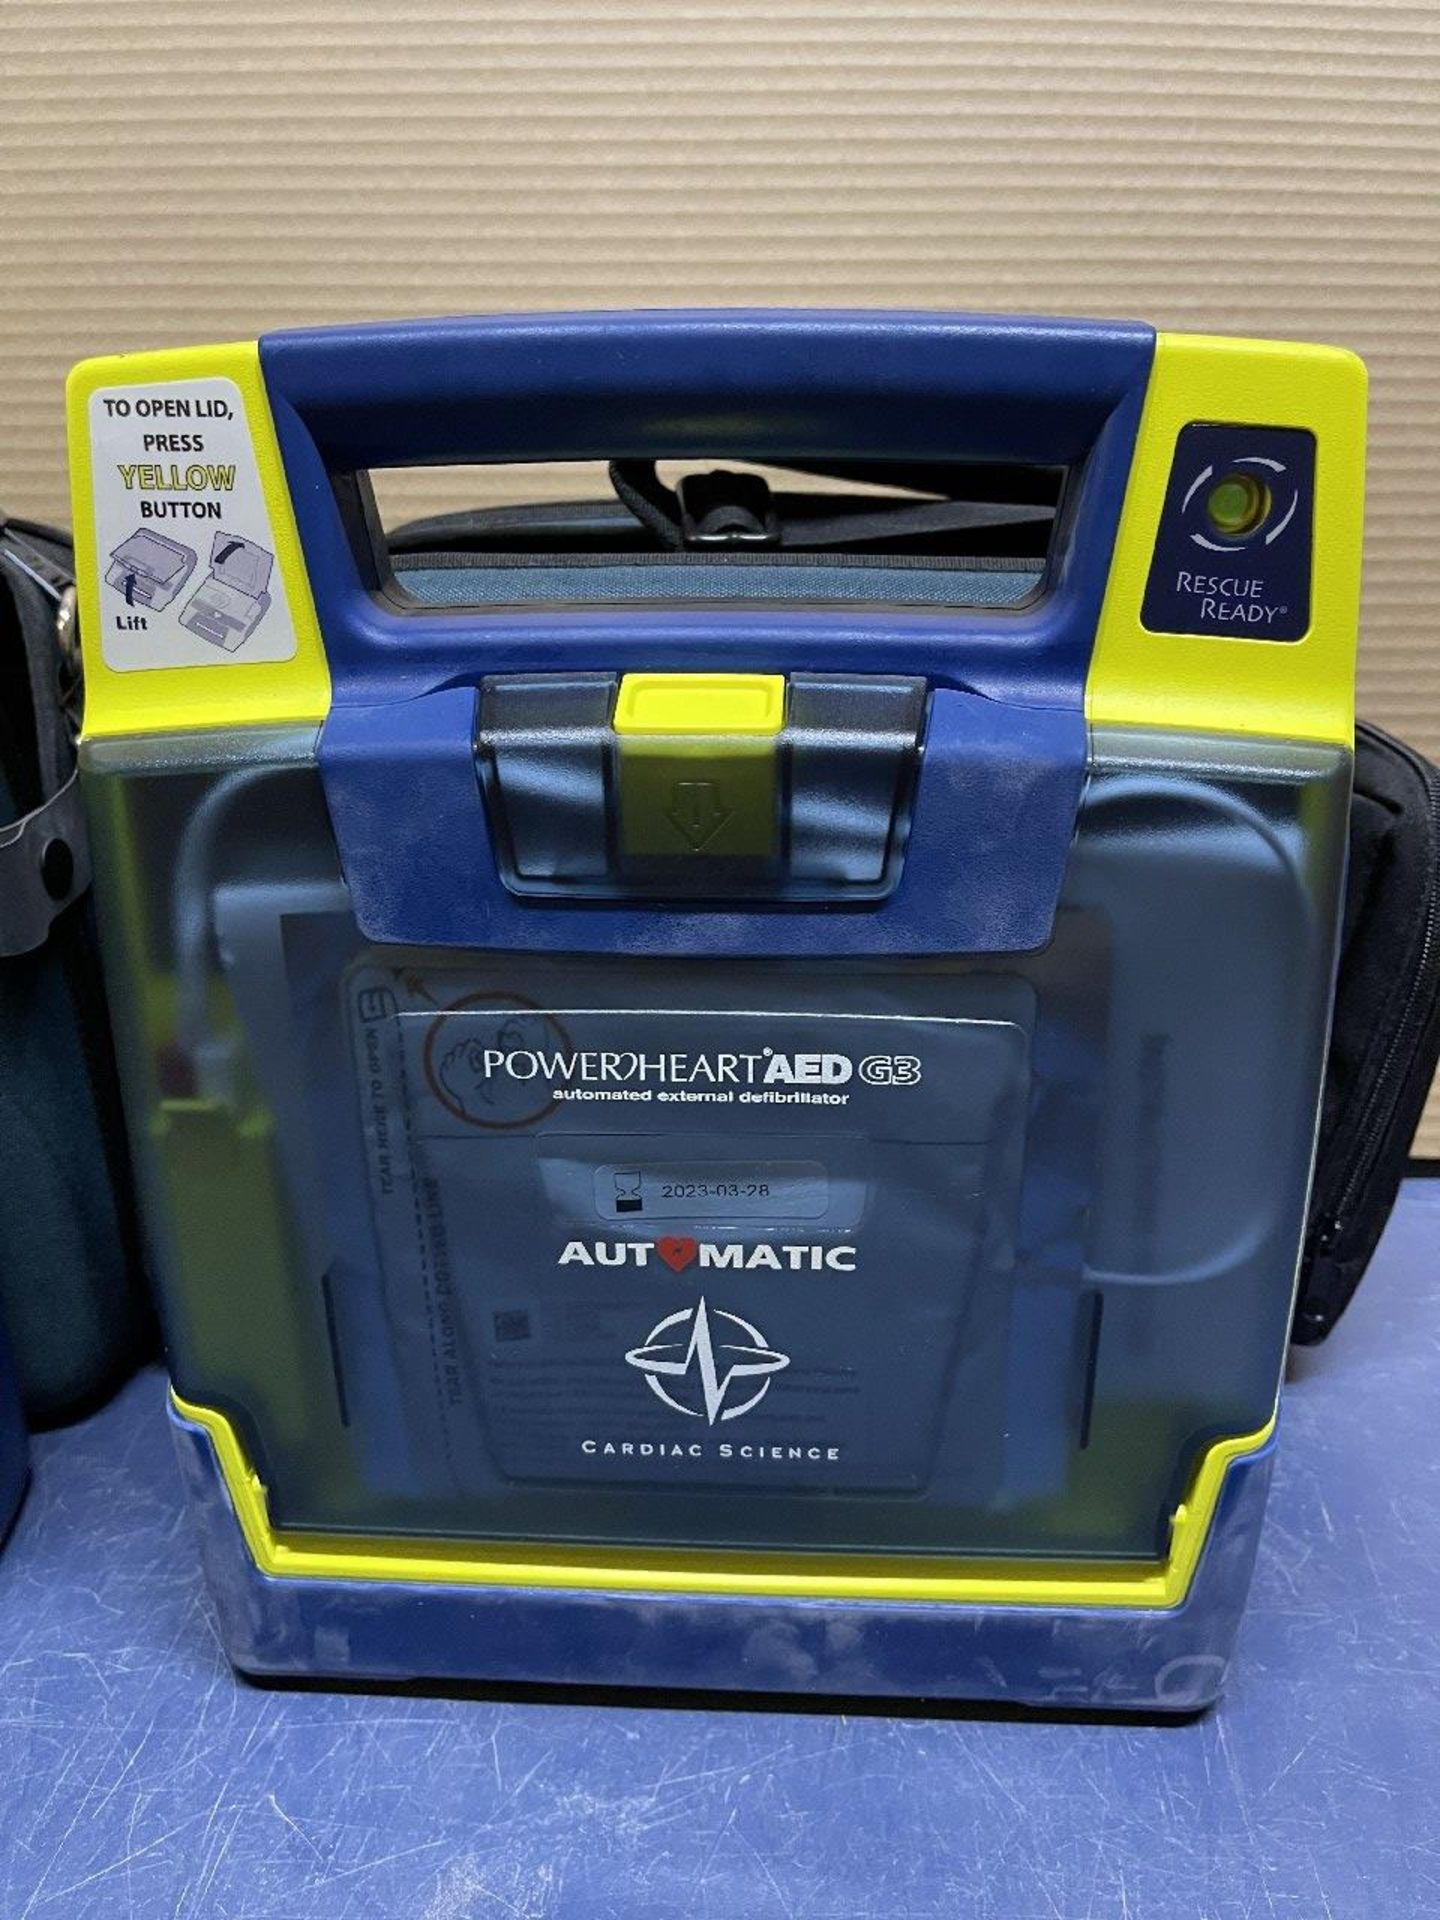 Cardiac Science Powerheart AED G3 Defibrillators - Image 5 of 6